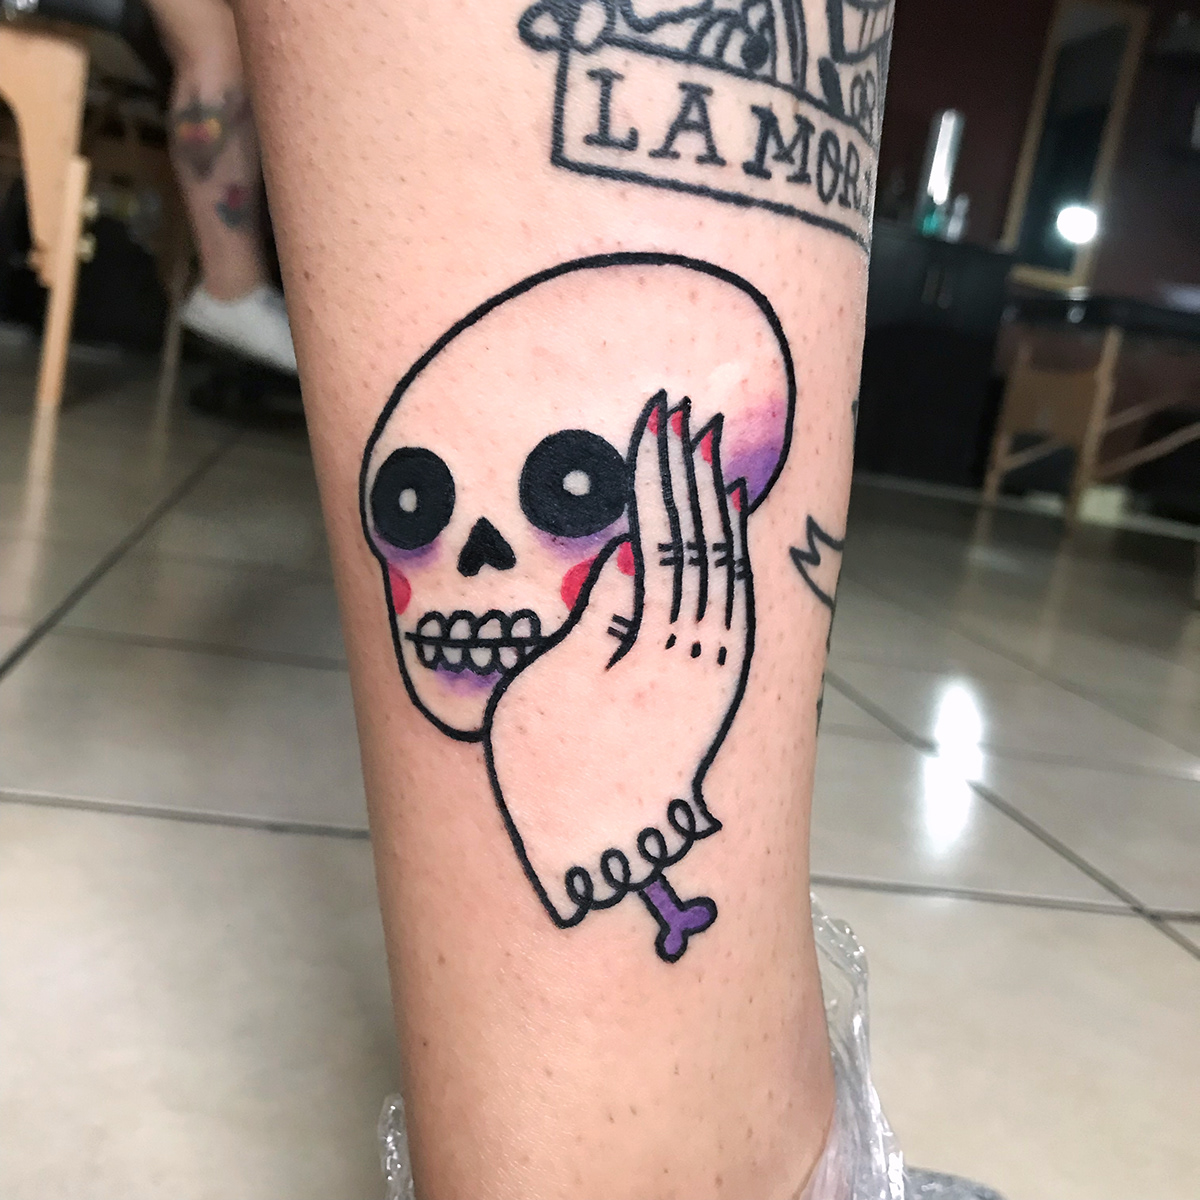 El Salvador tattoo tattoo design demon women skull